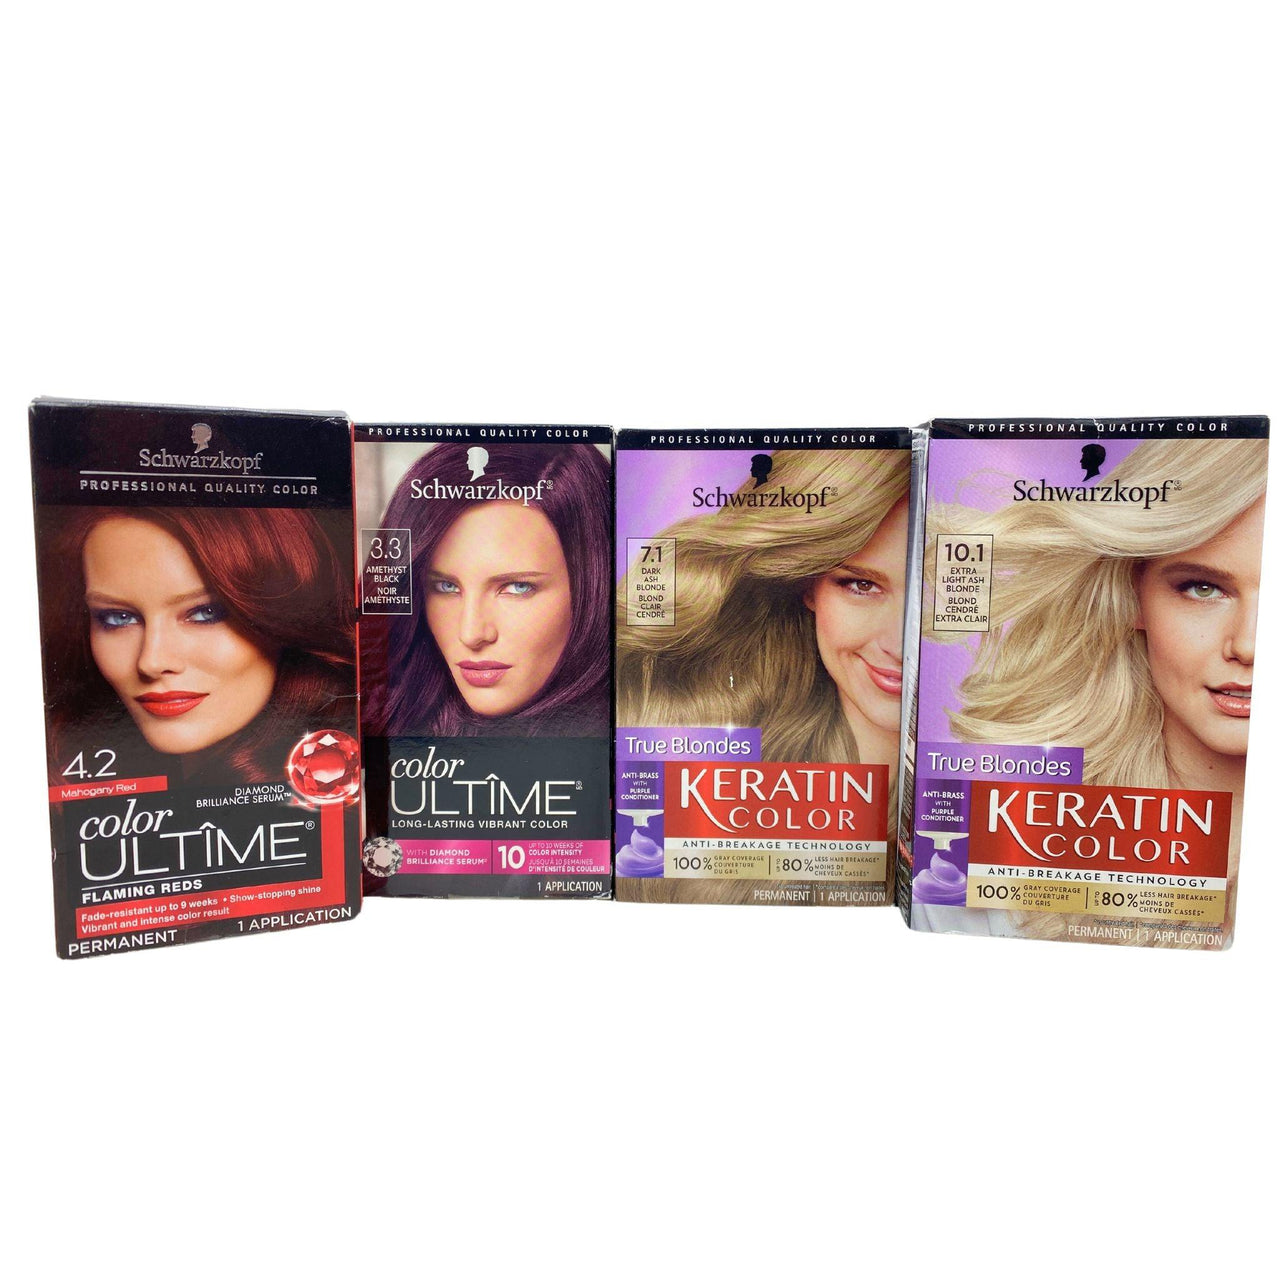 Schwarzkopf Professional Quality Color Assorted Hair Dye Mix (50 Pcs Lot) - Discount Wholesalers Inc